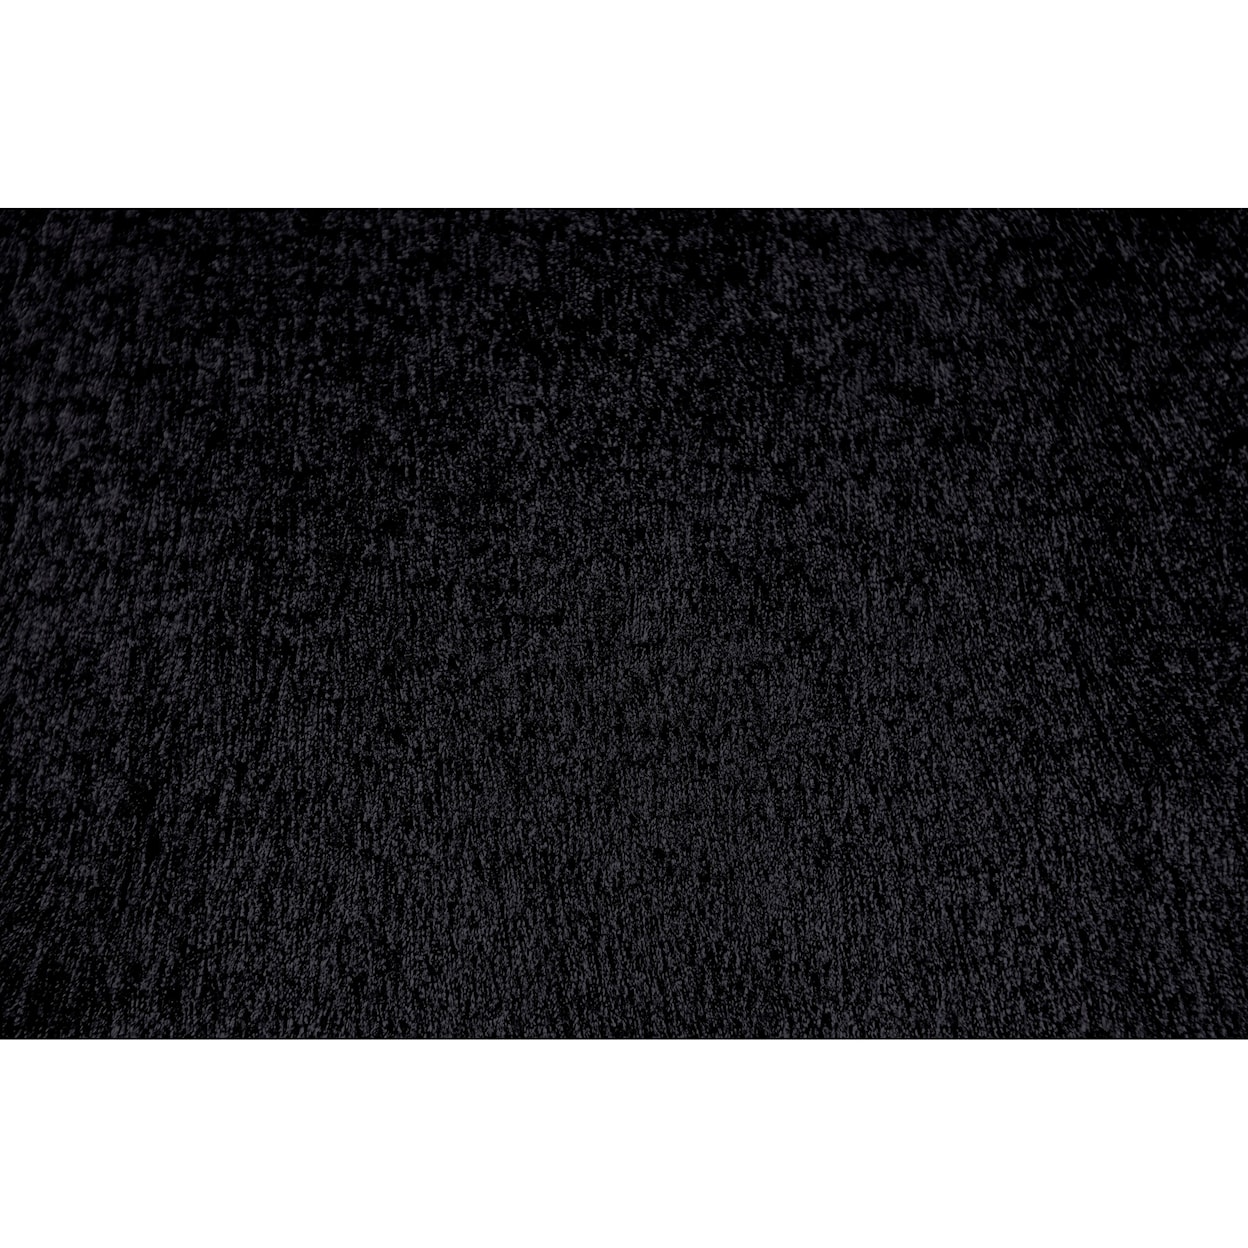 Feizy Rugs Indochine Black 4'-9" X 7'-6" Area Rug